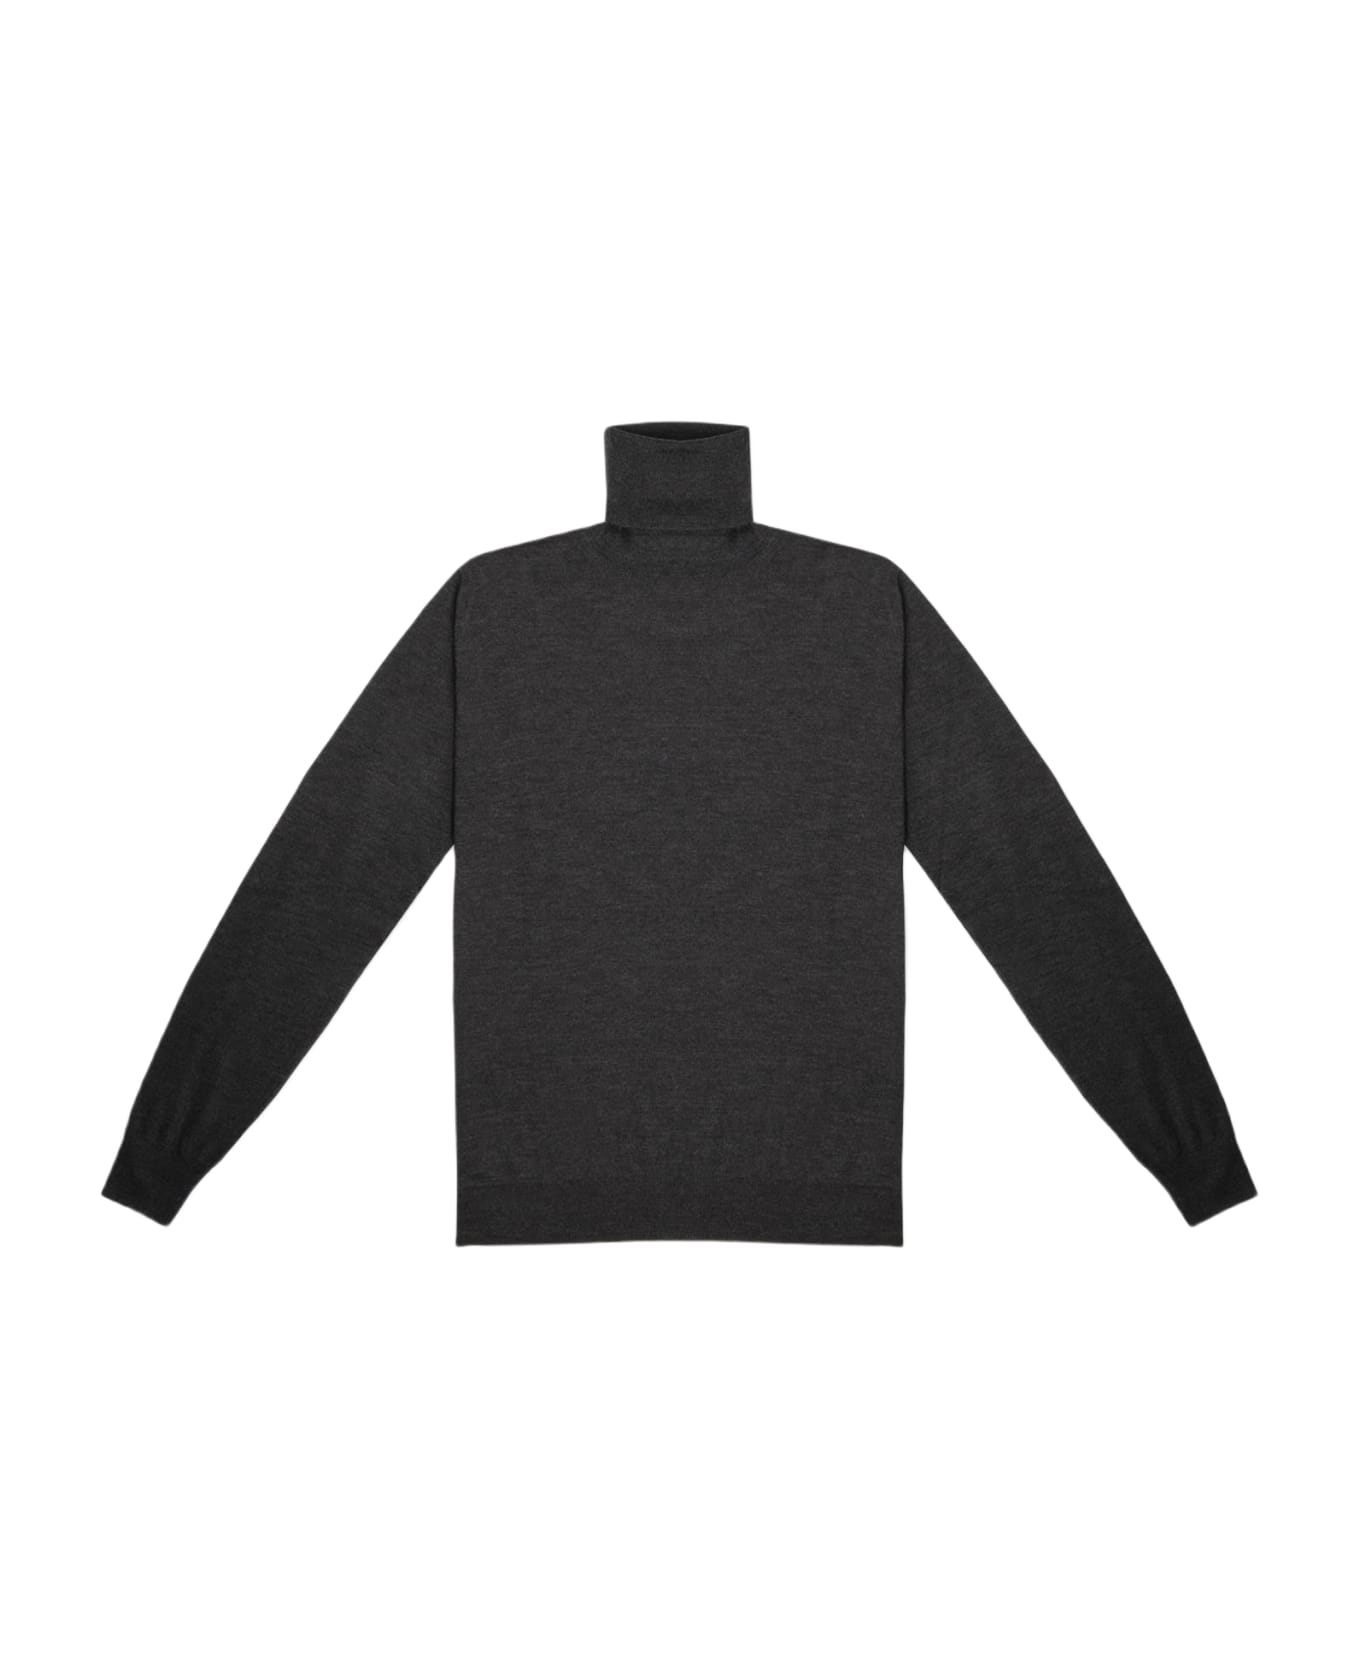 Larusmiani Turtleneck Sweater 'pullman' Sweater - DimGray